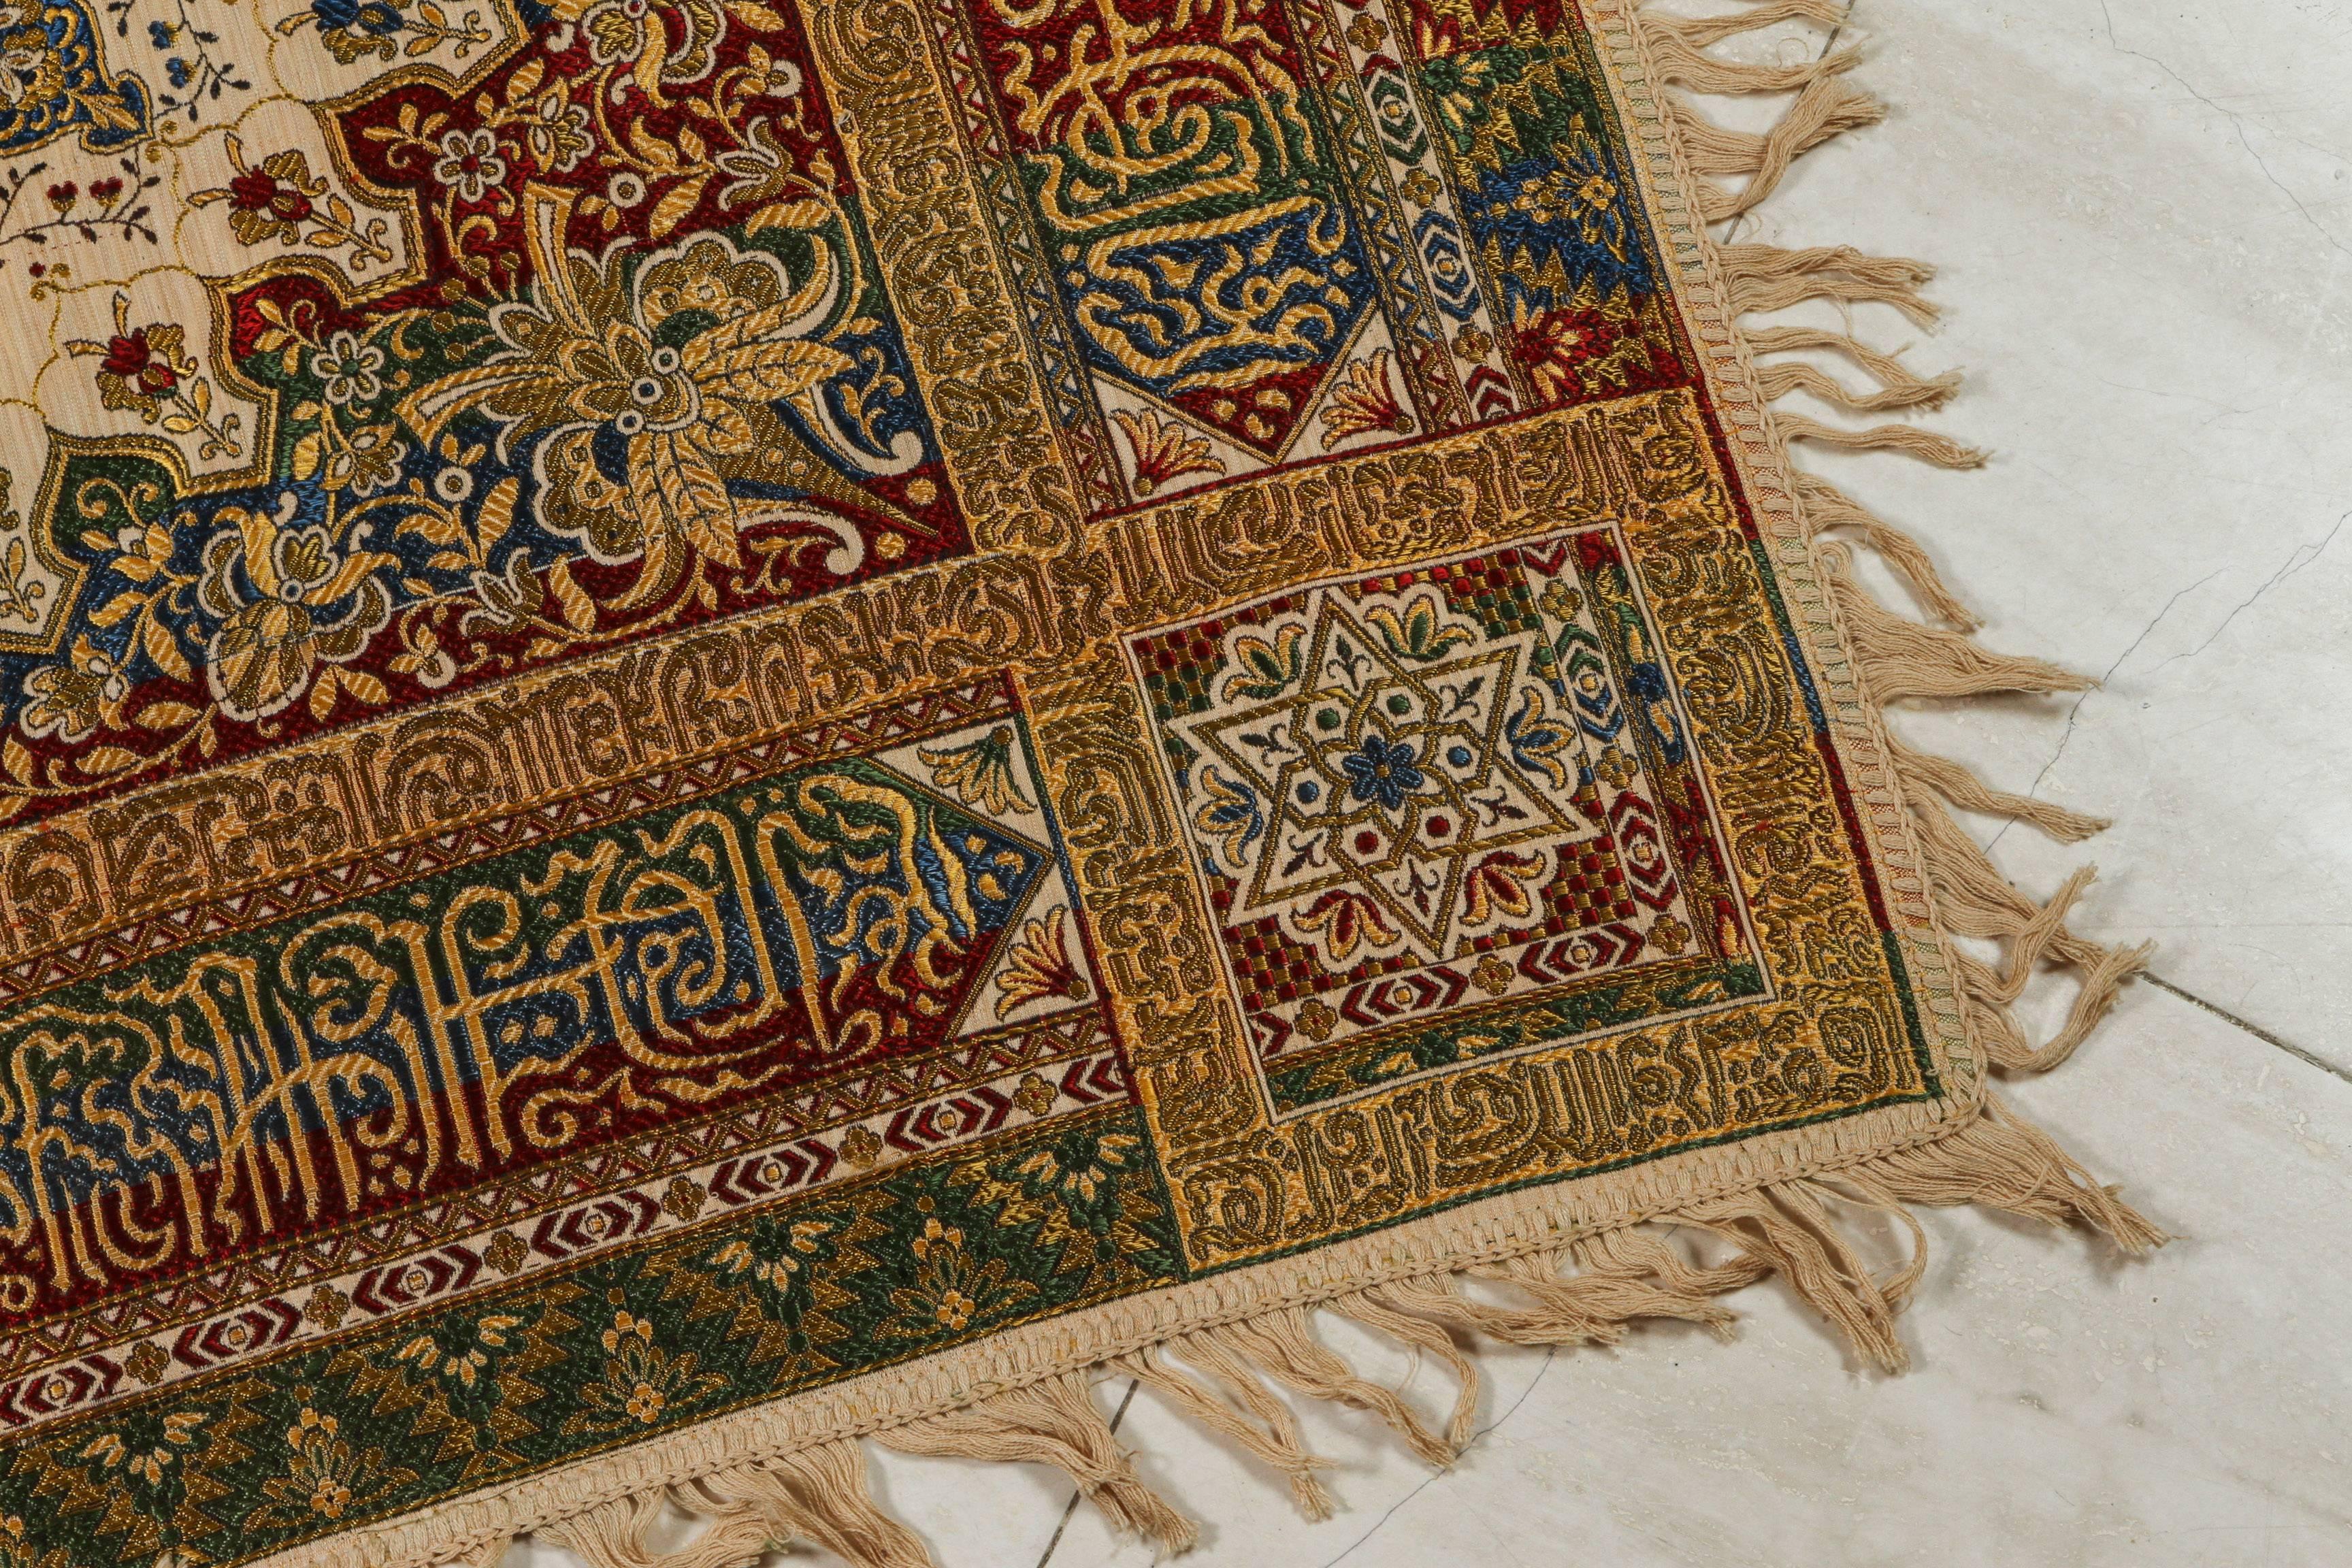 Granada Islamic Spain Textile with Moorish Calligraphy Writing 1